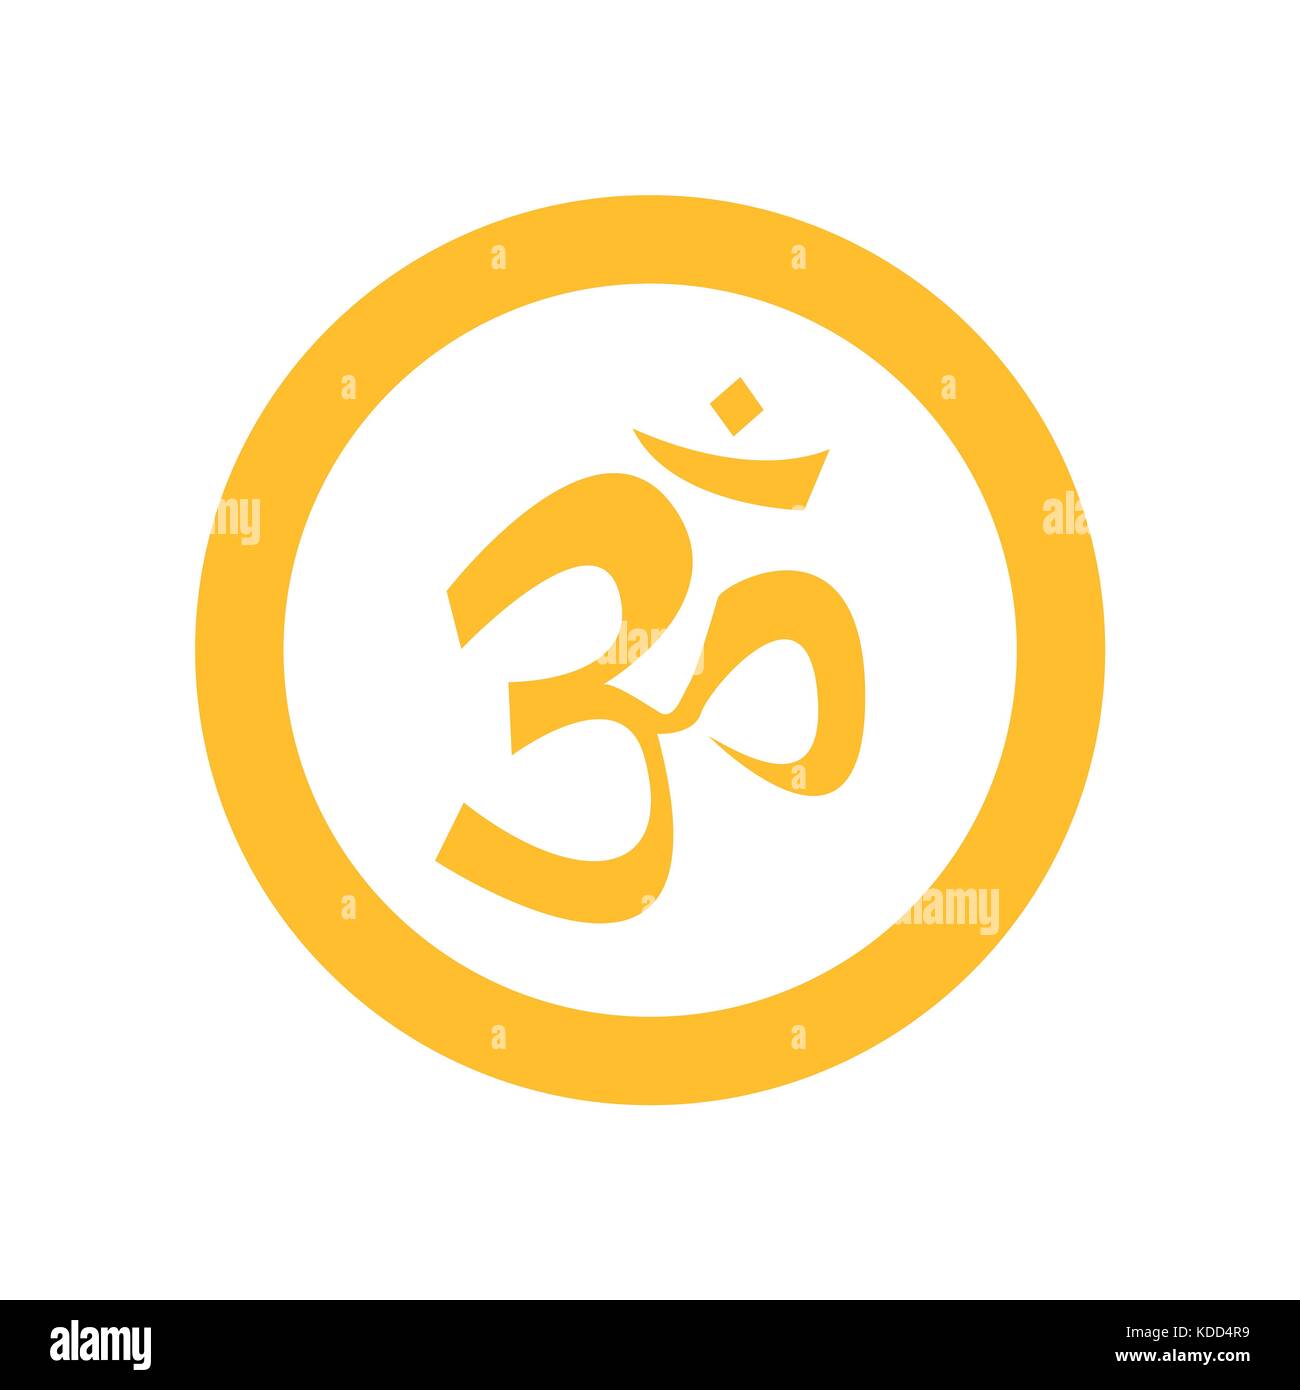 Simple Circular Yellow Om Symbol Stock Photo